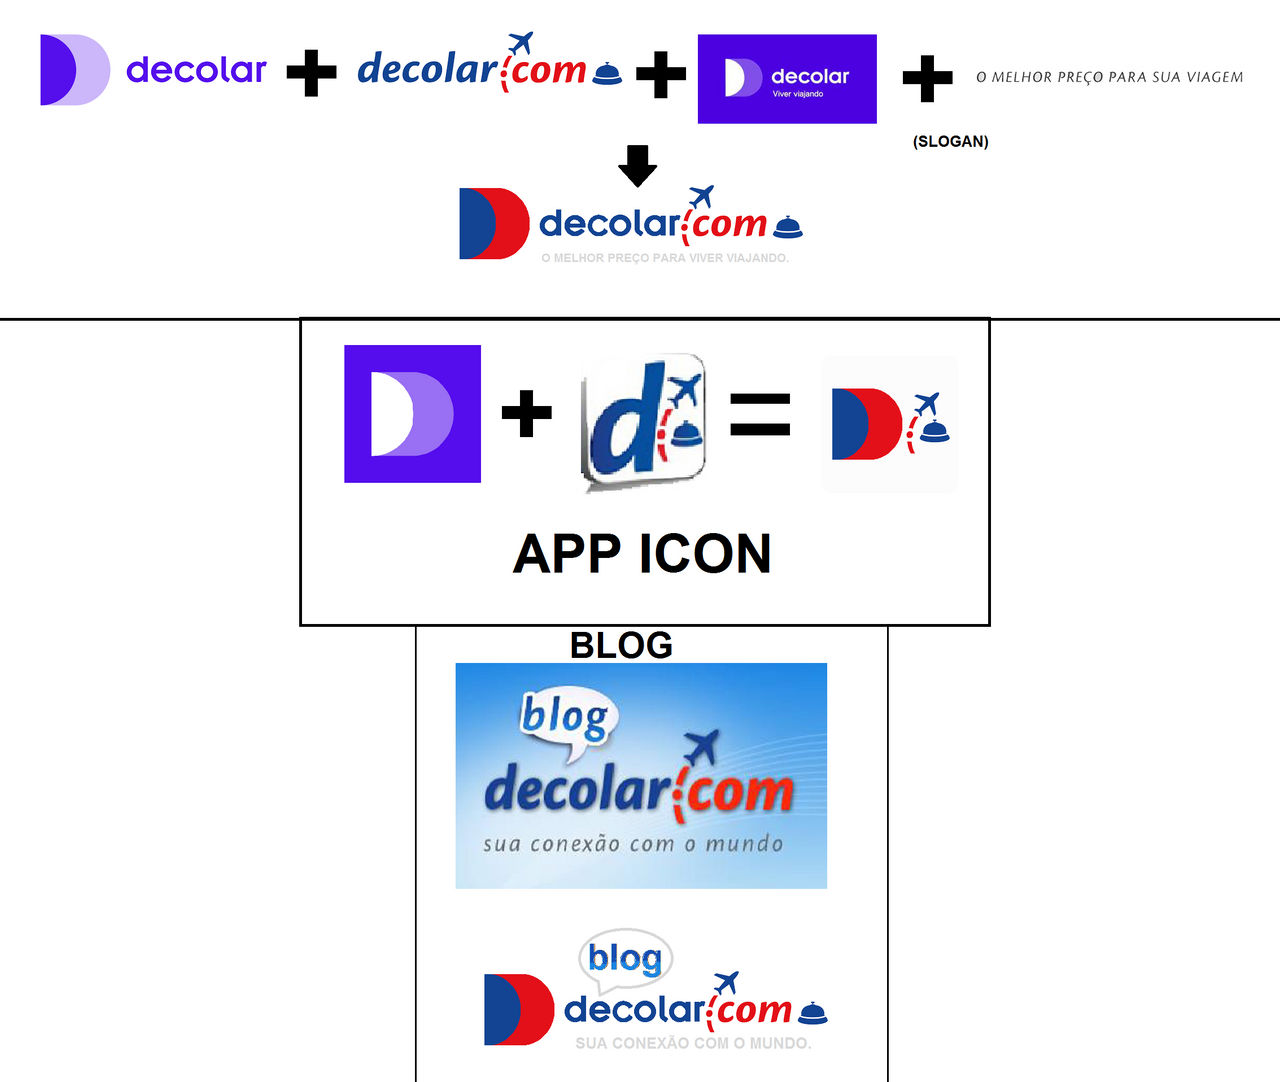 Decolar.com Mashup by NathanDaSilva on DeviantArt